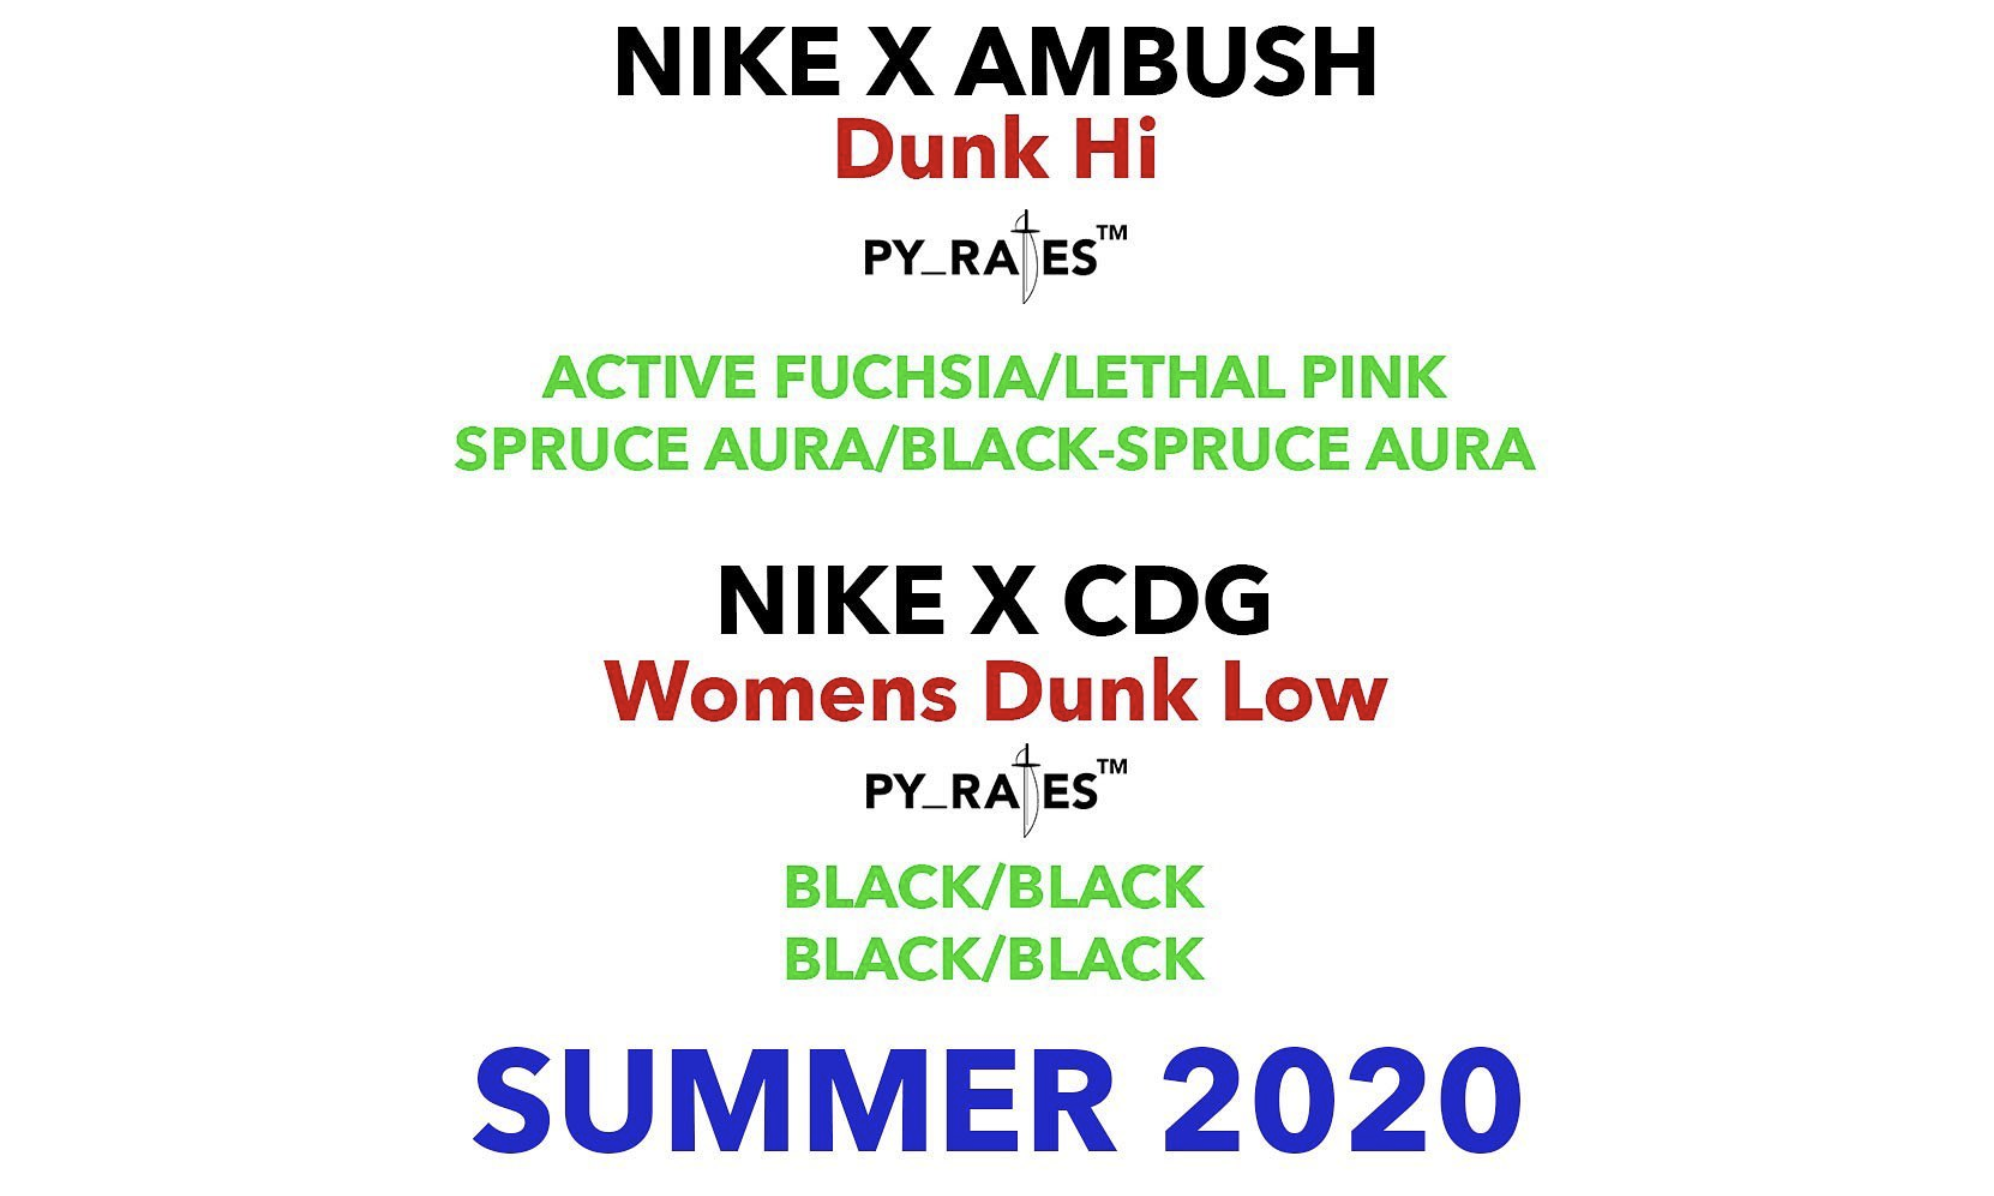 AMBUSH、CdG 将在明年分别推出 Dunk 联名设计